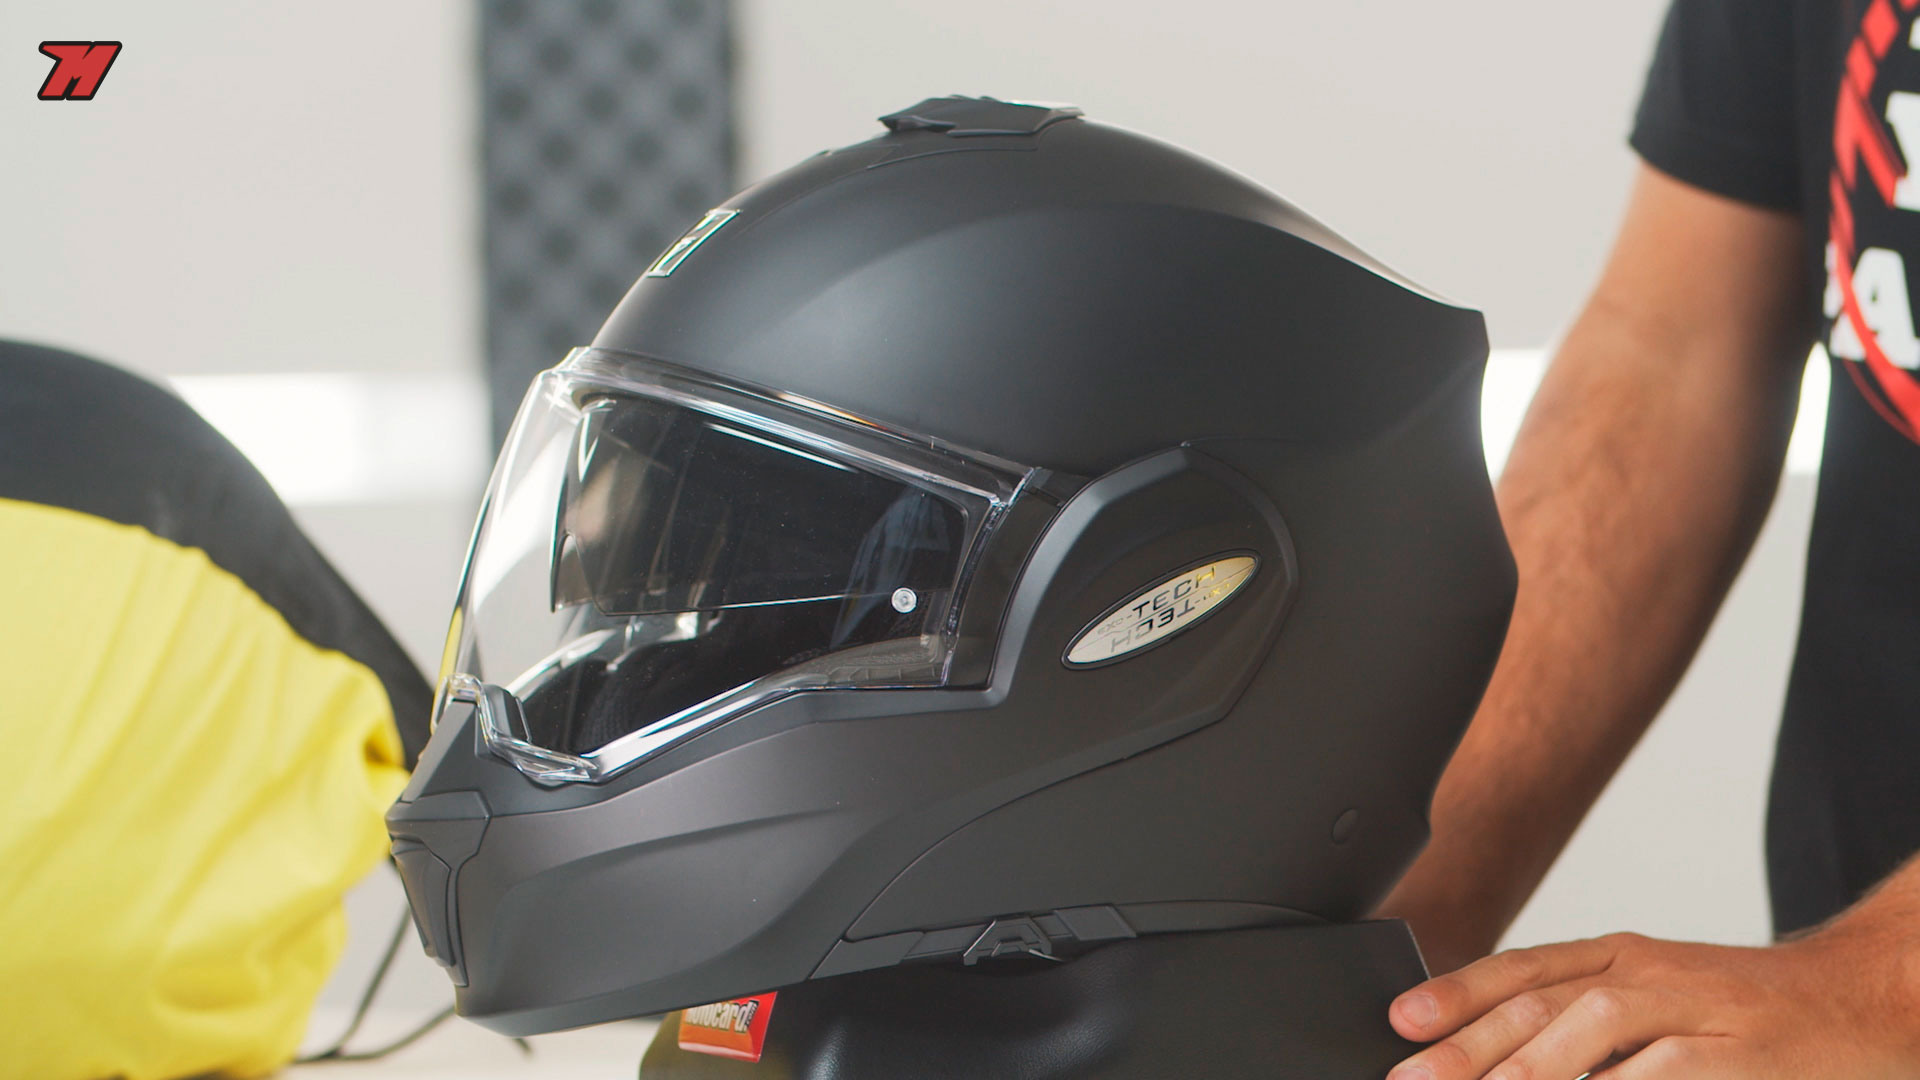 Review: Scorpion Exo-Tech, the new best-selling modular helmet